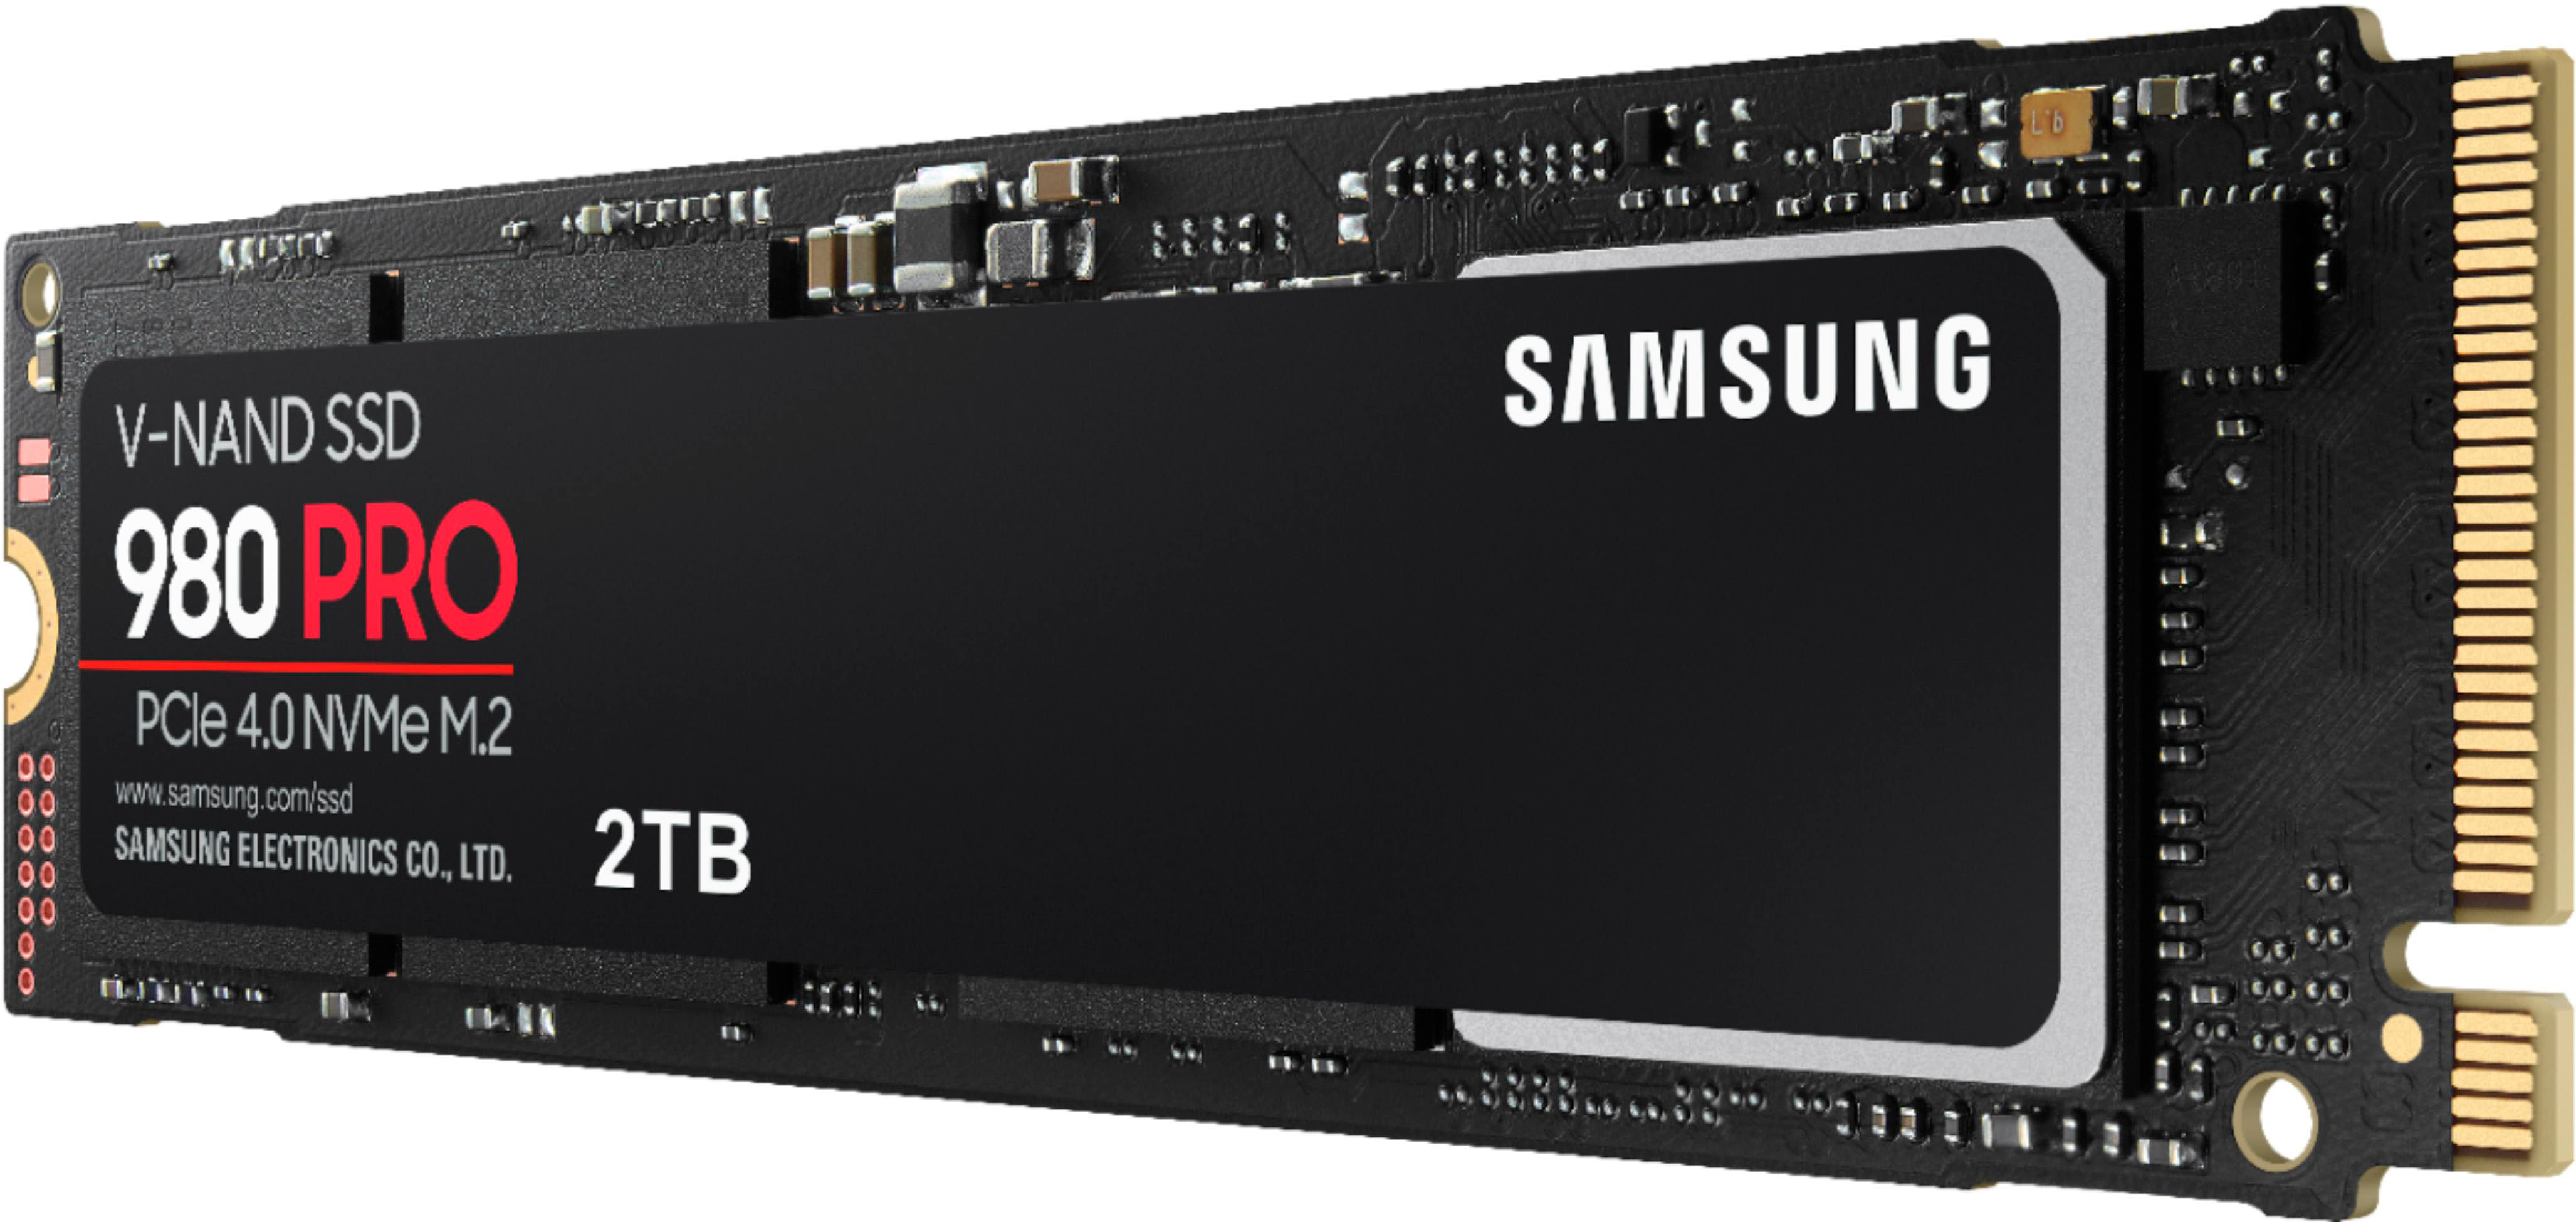 Samsung 2tb 980 pro  fakes : r/pcmasterrace